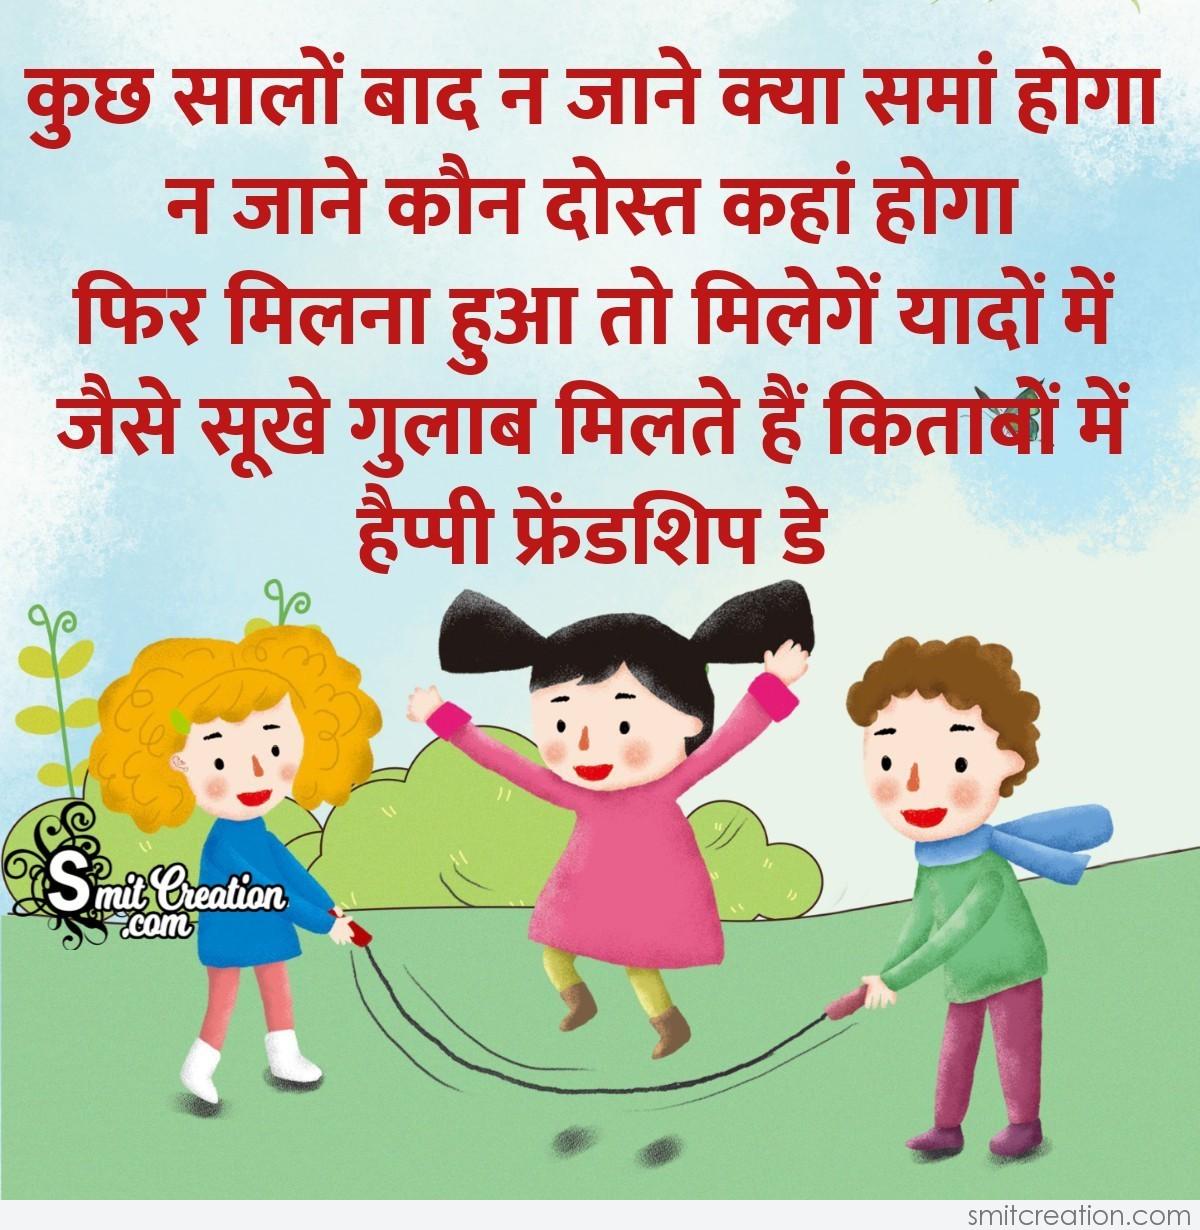 Happy Friendship Day In Hindi 